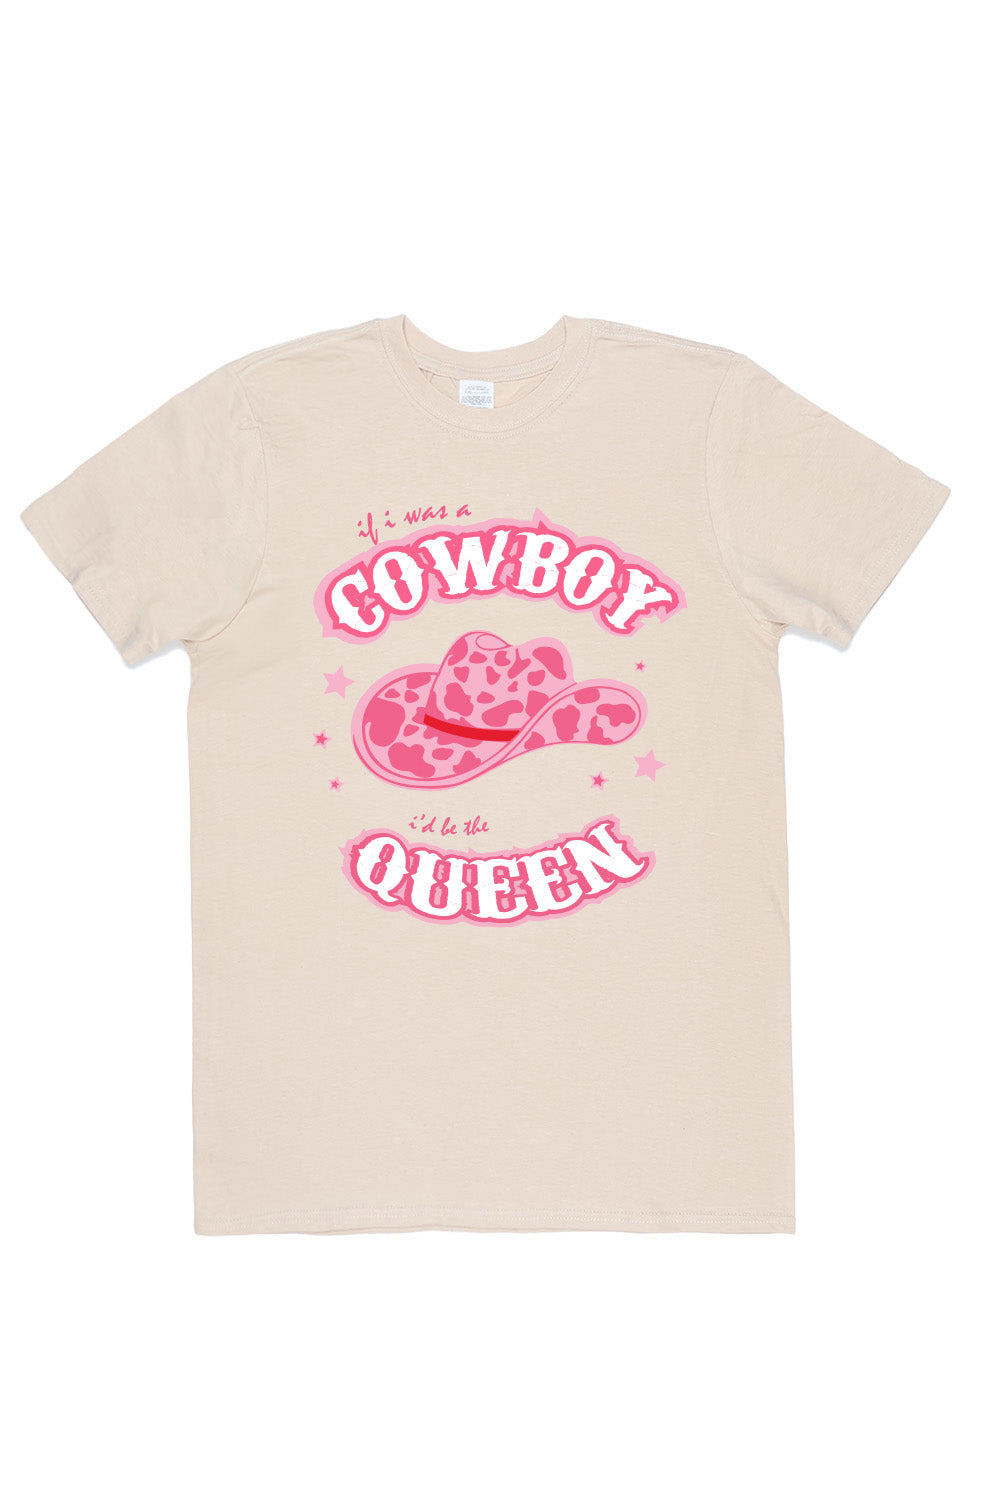 Cowboy Queen T-Shirt in Sand (Custom Packs)